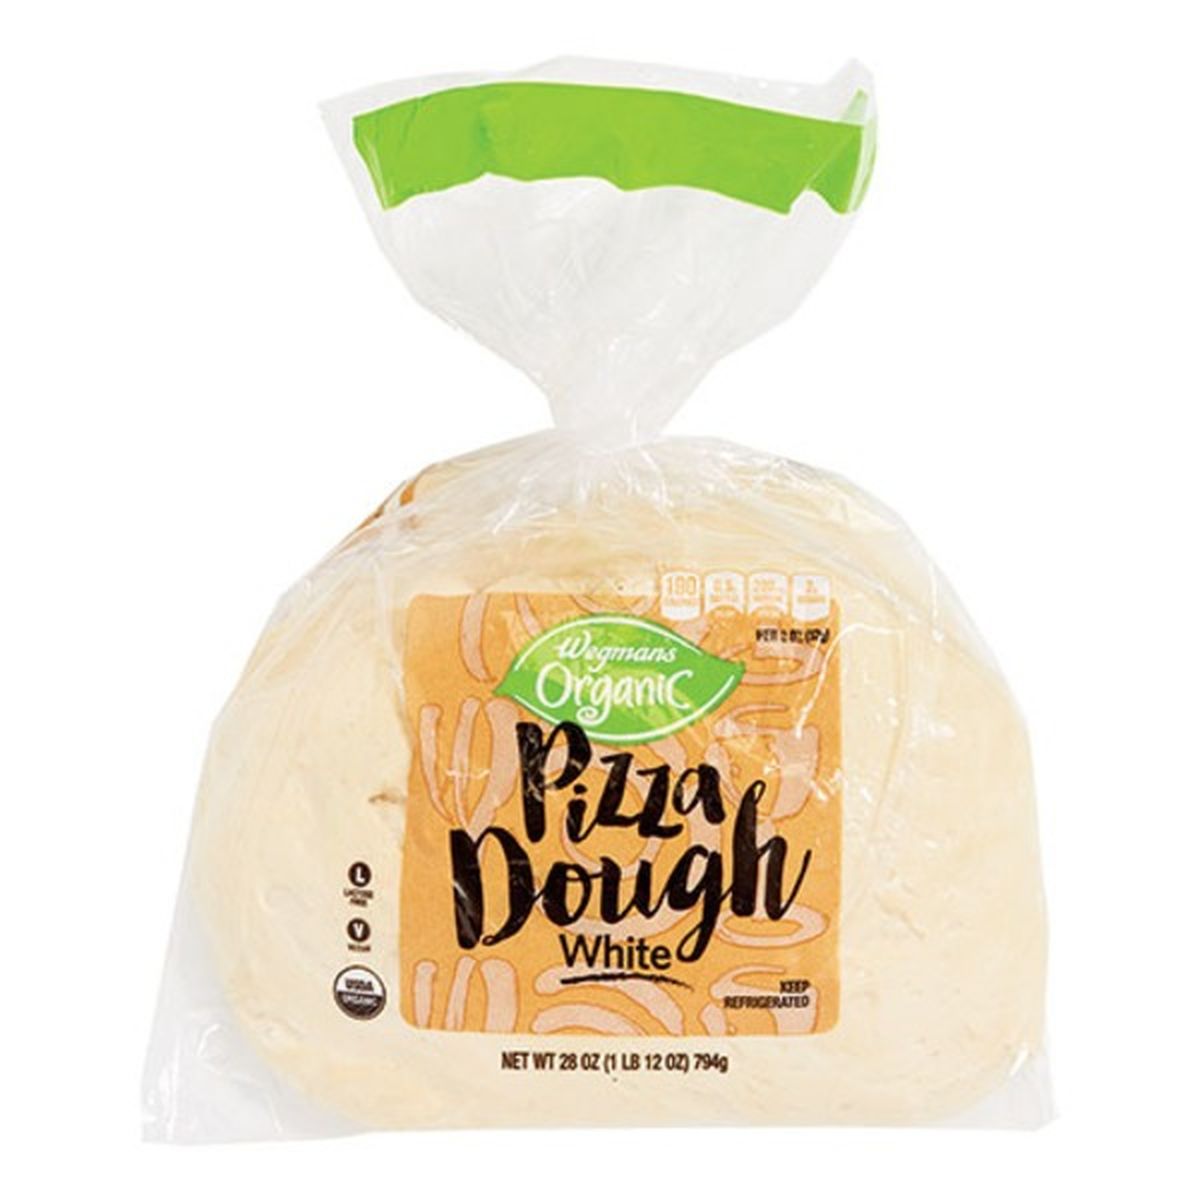 Calories in Wegmans Organic Organic Pizza Dough, White